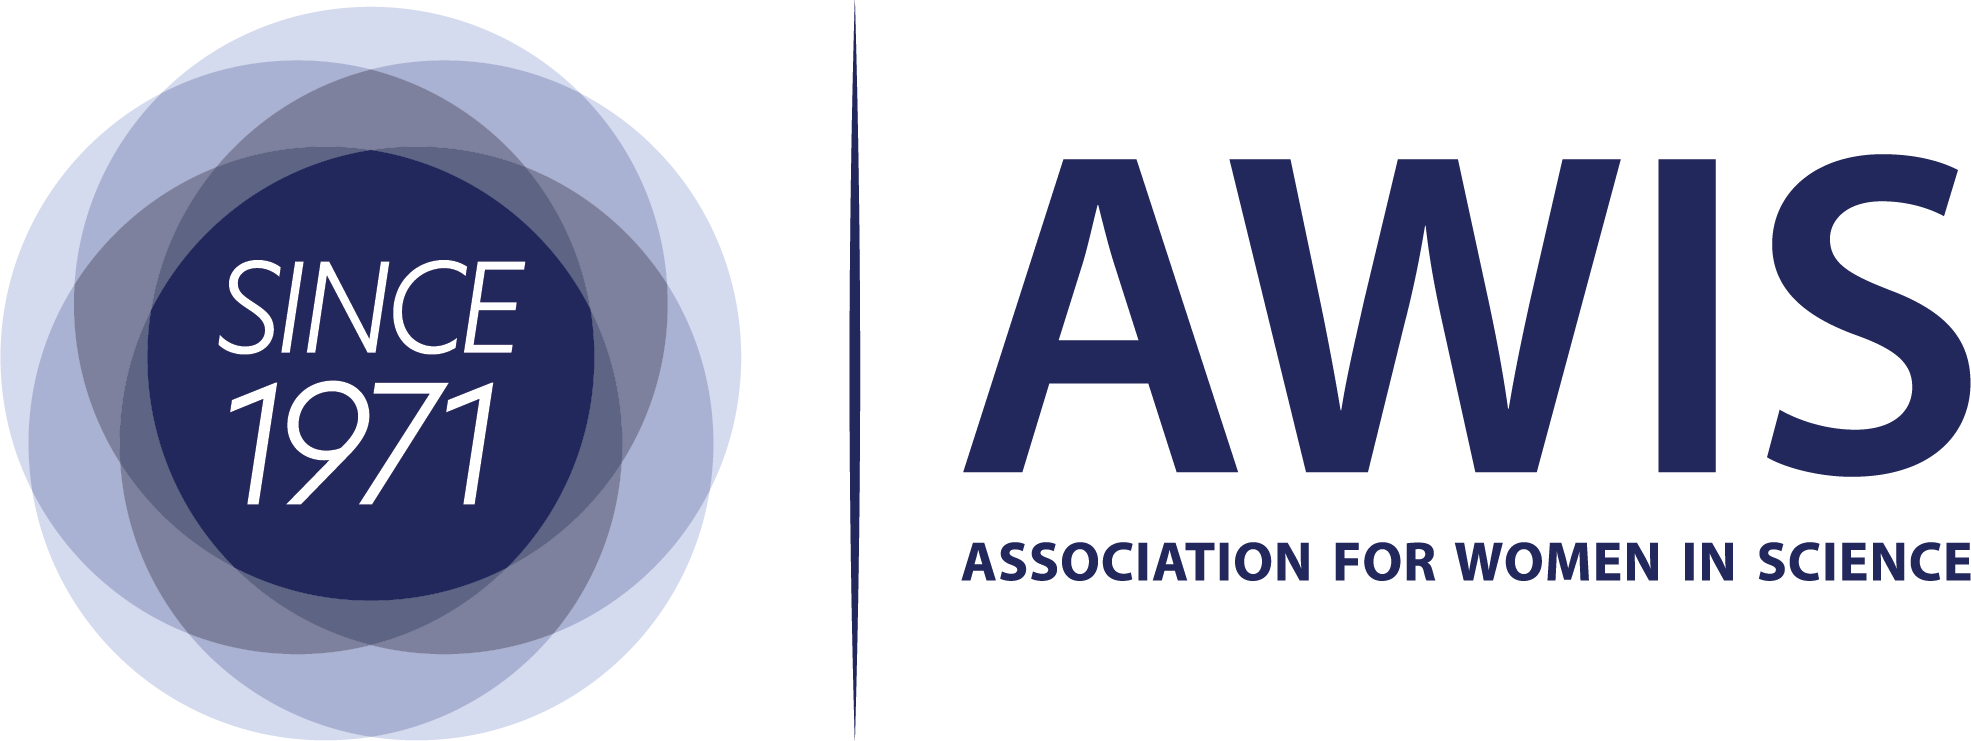 Association for Women in Science Community